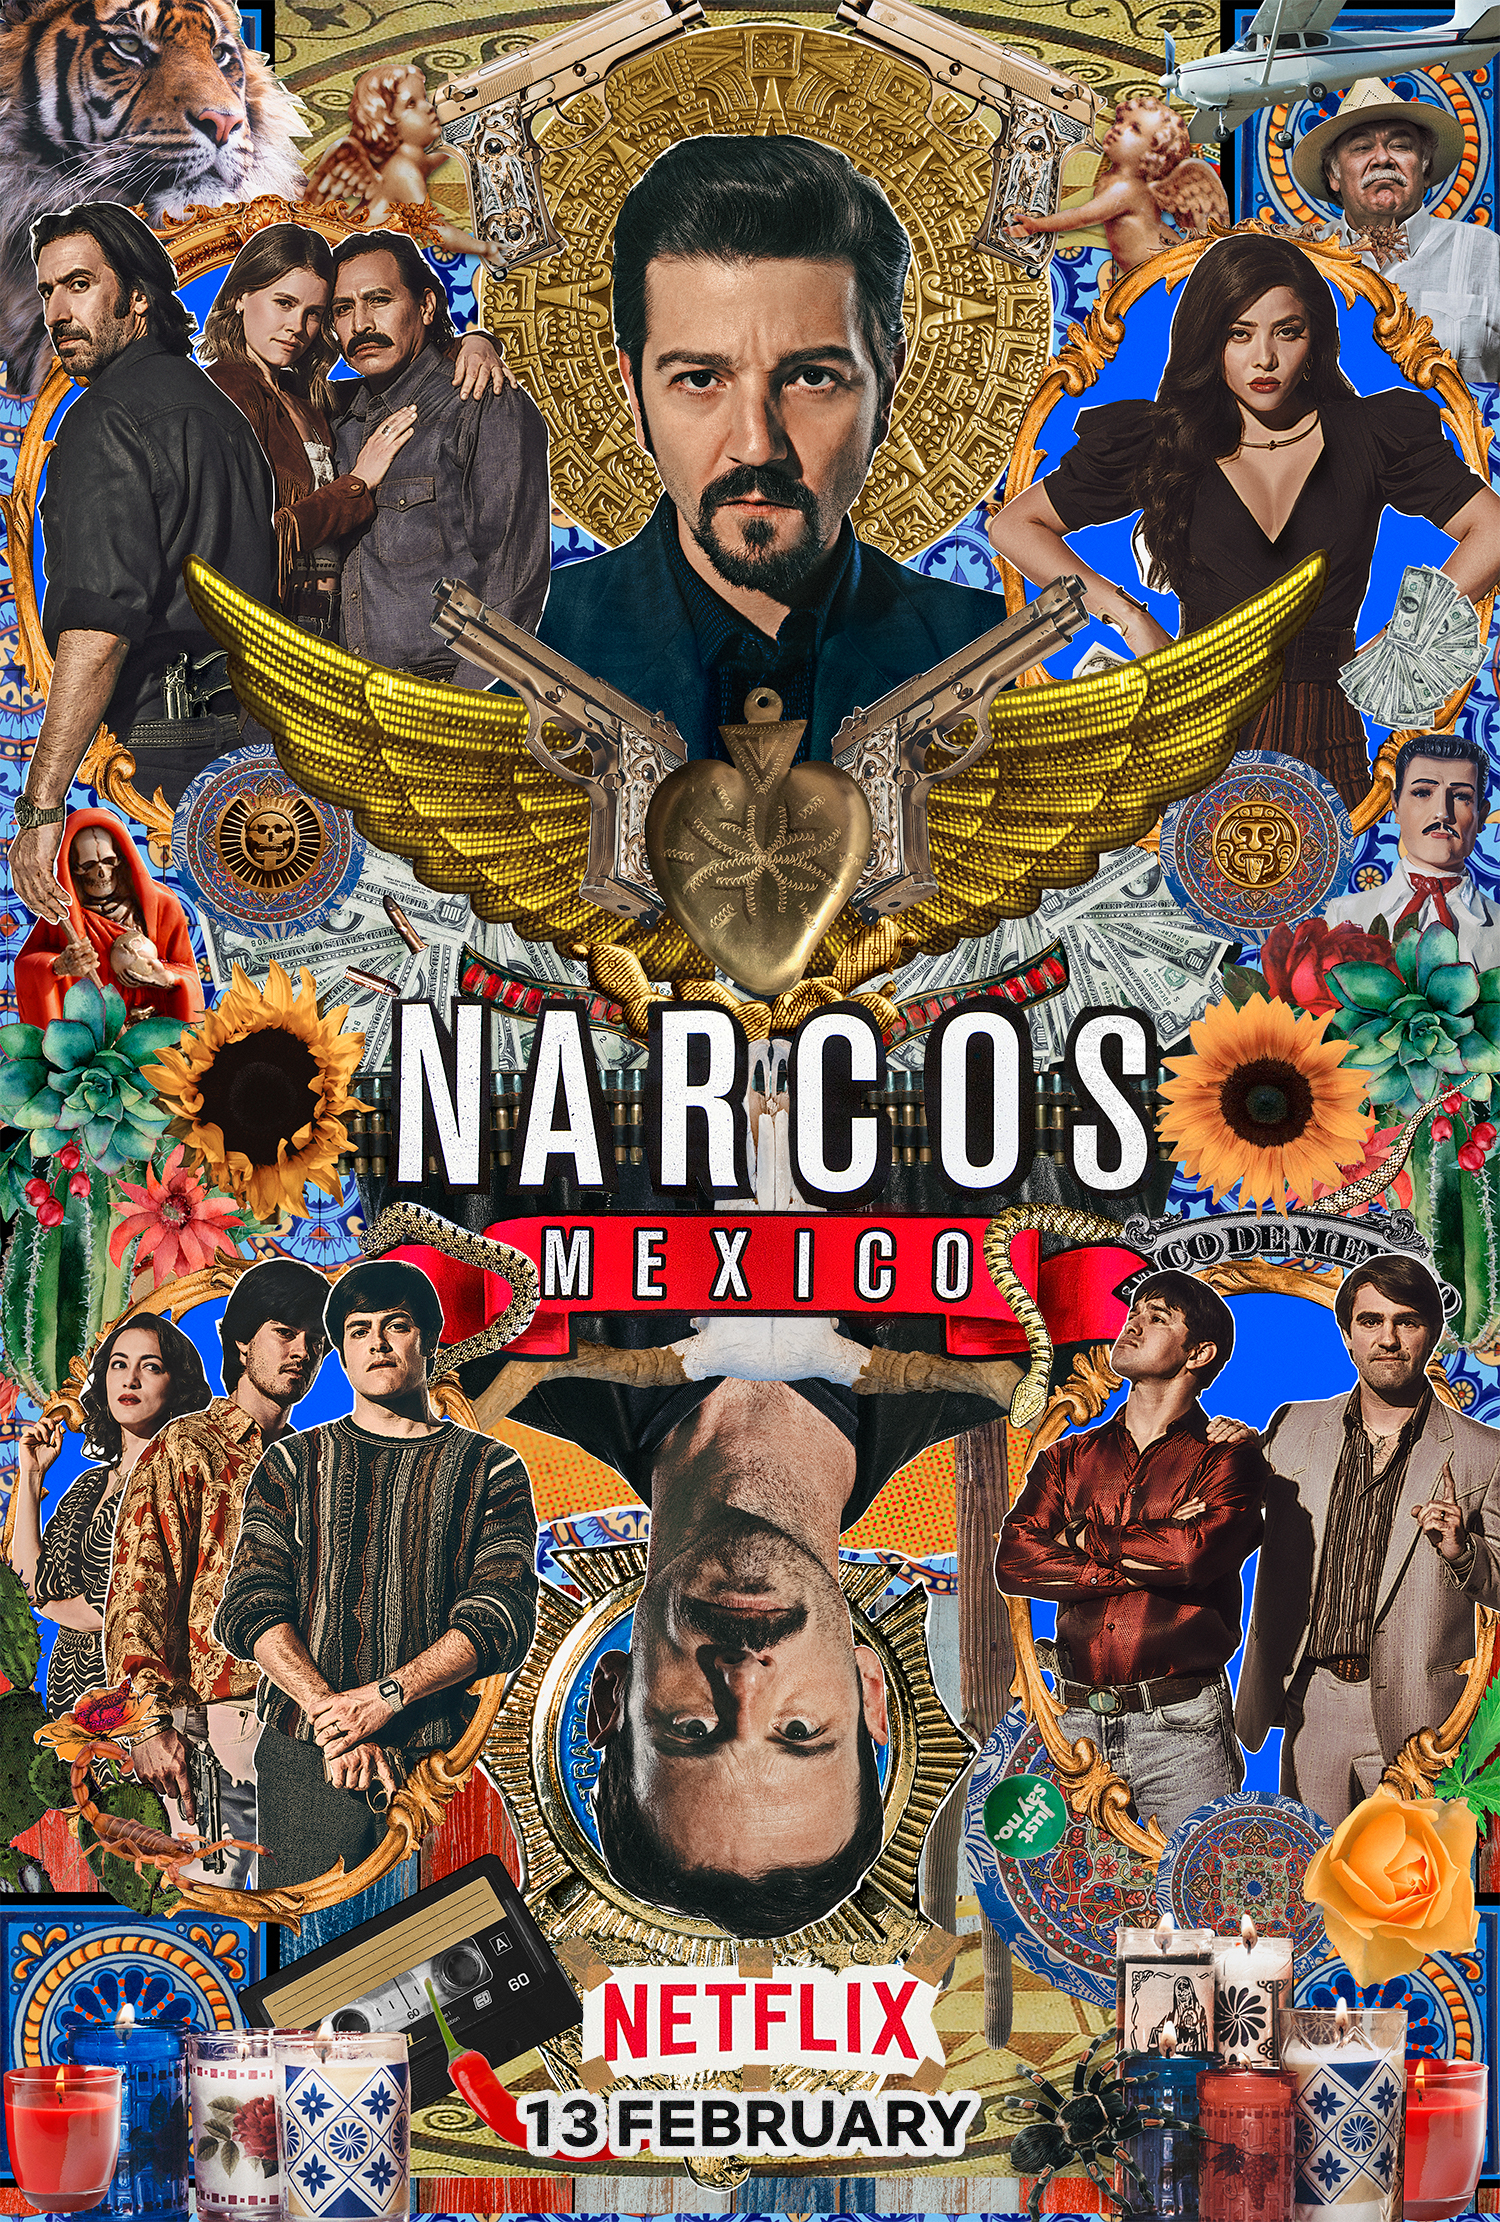 Stiahni si Seriál Narcos: Mexiko / Narcos: Mexico S01E10 (CZ)[WebRip][1080p] = CSFD 86%